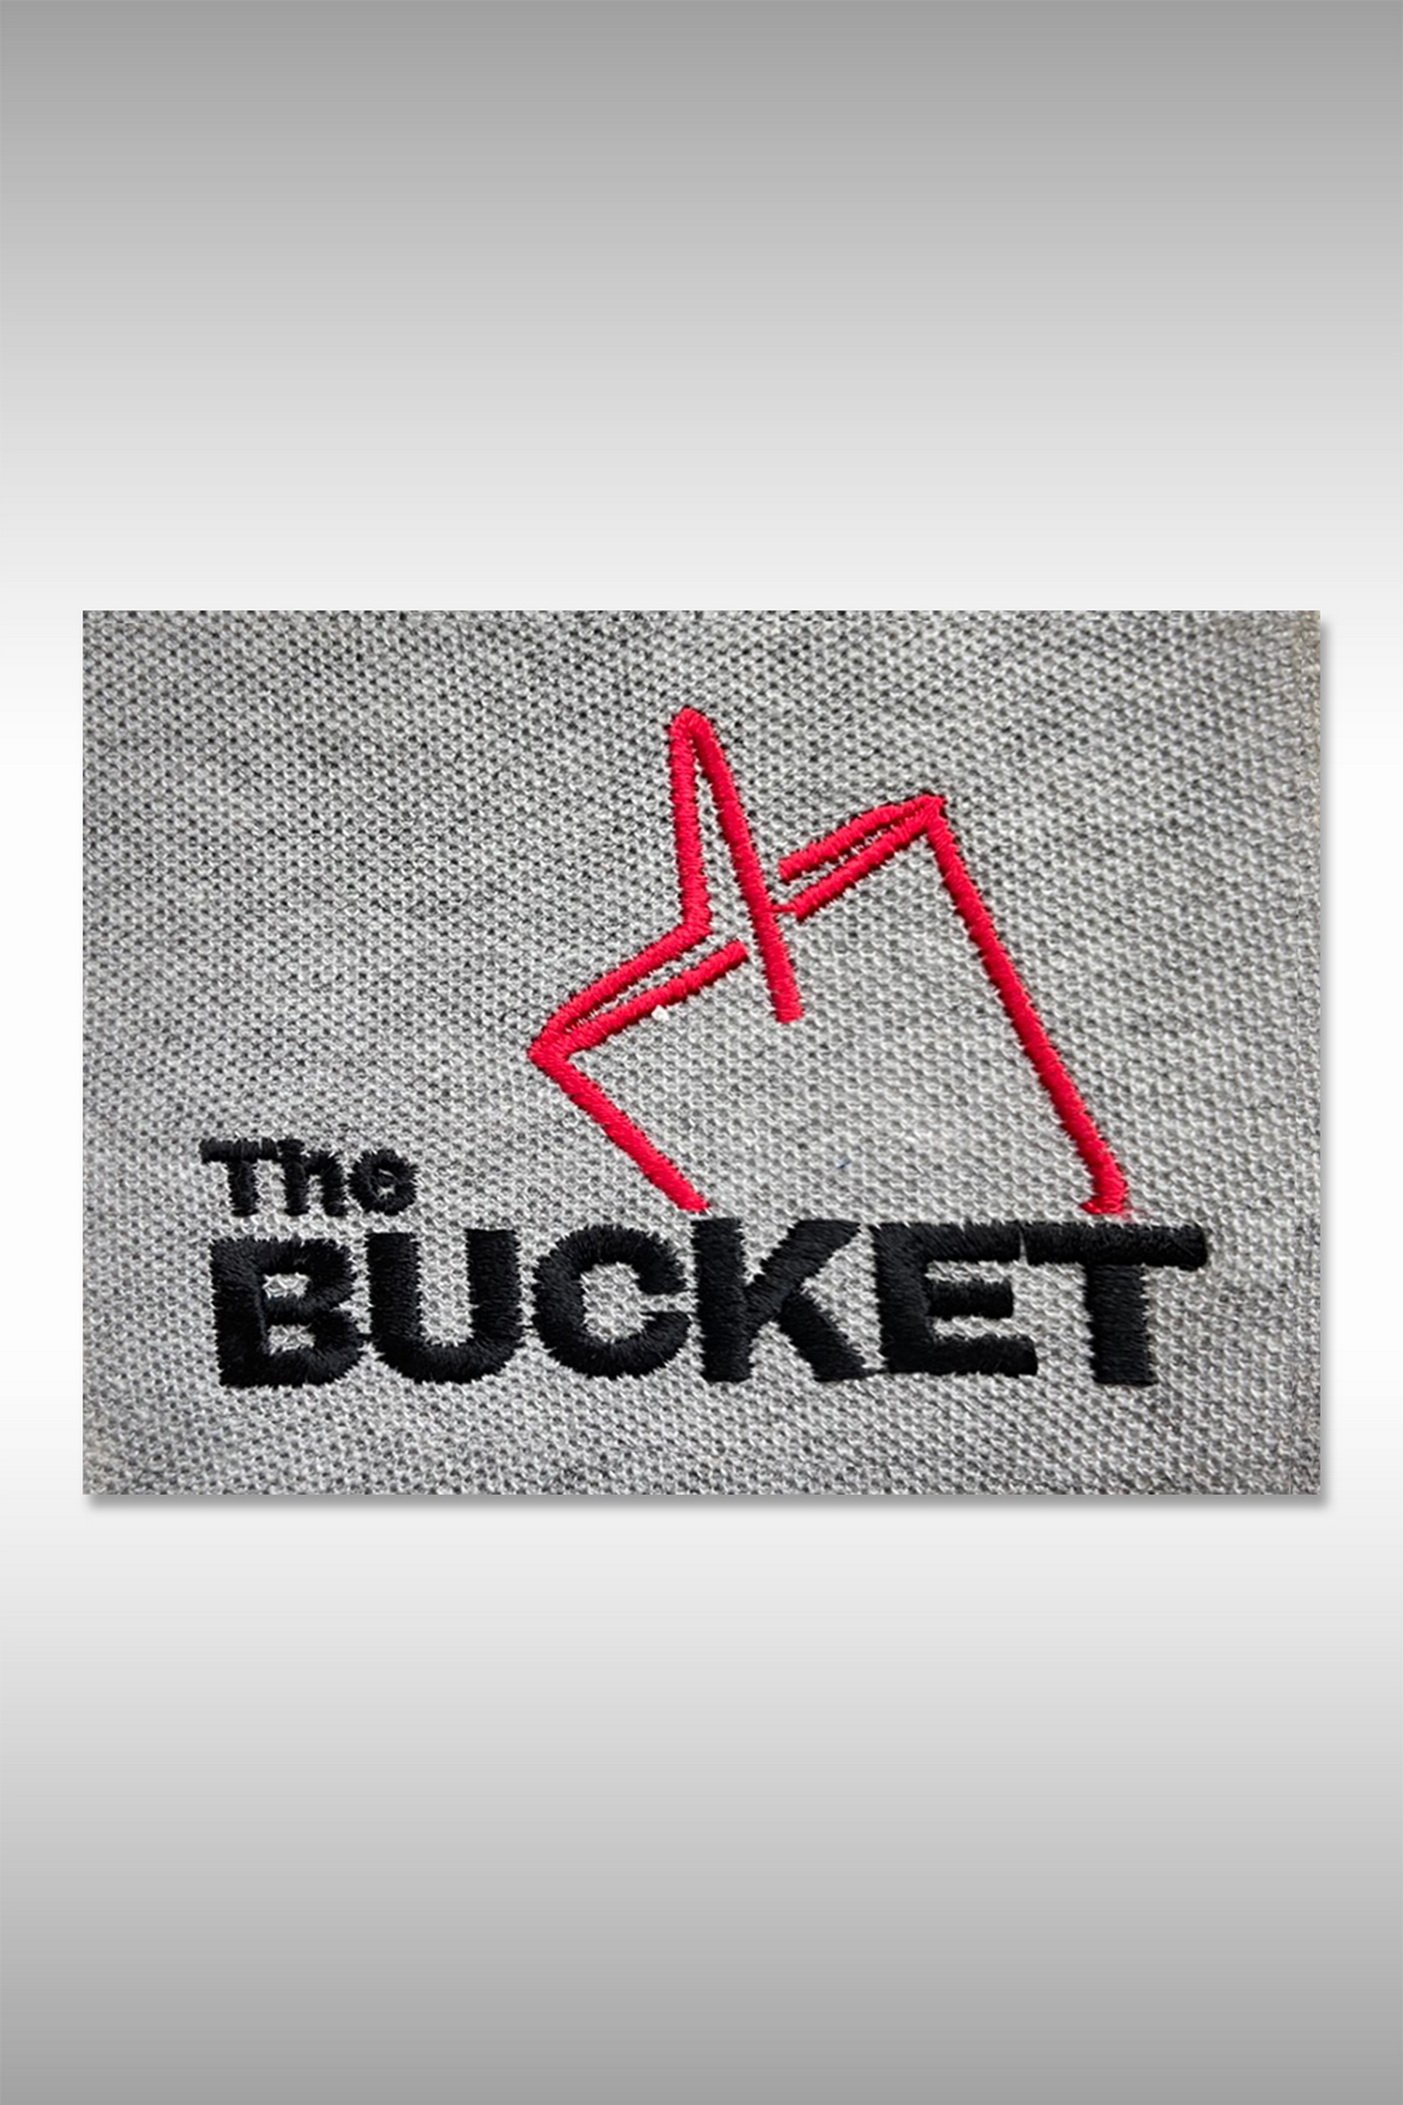 Logo  The BUCKET